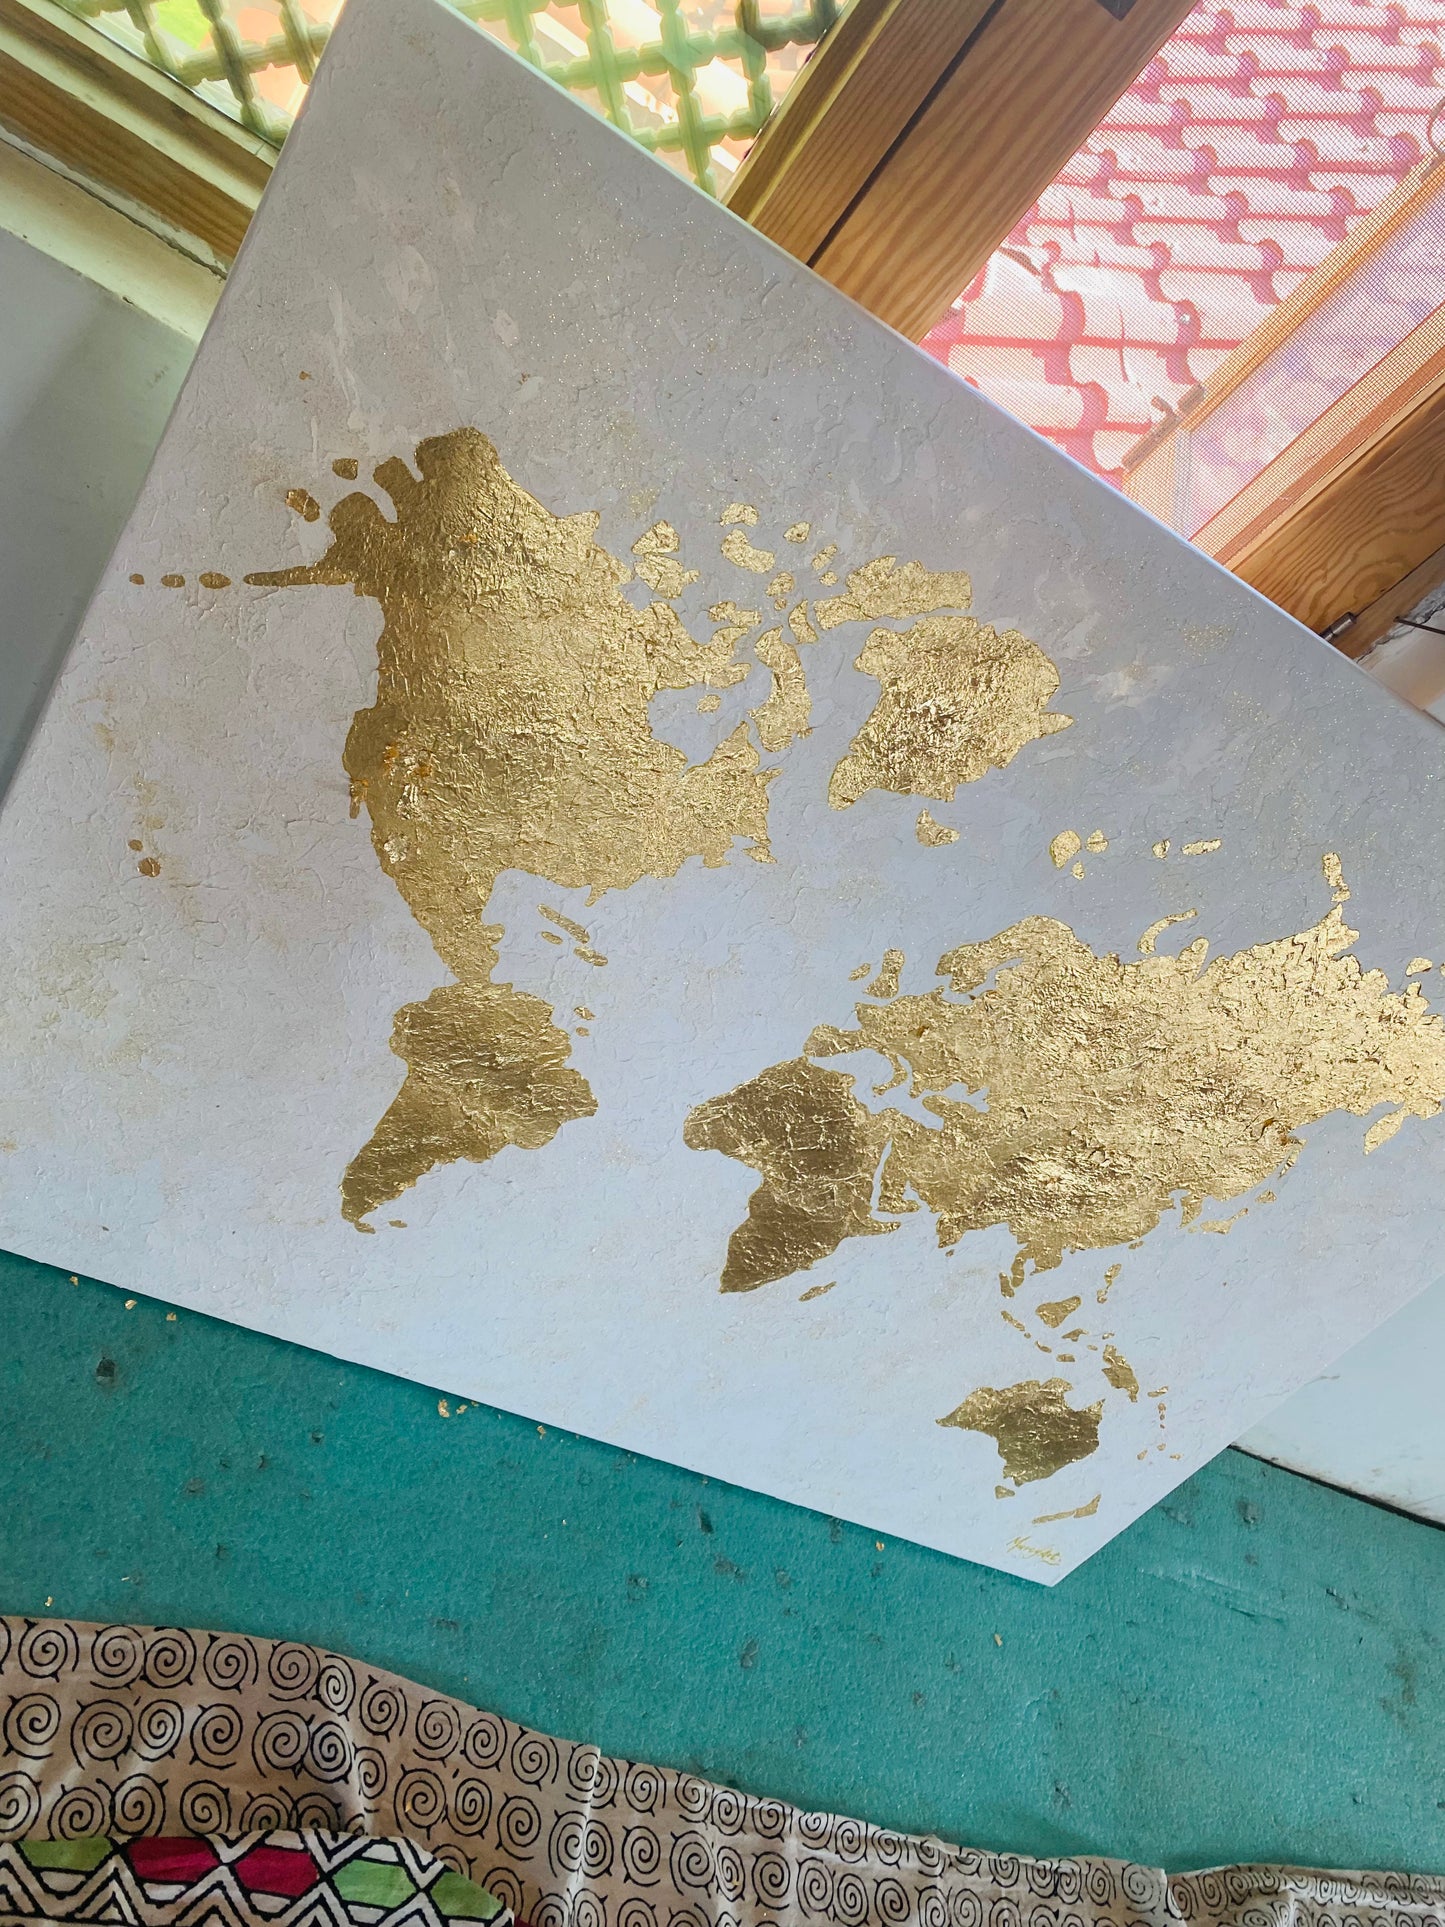 “Gold World Map Artwork”